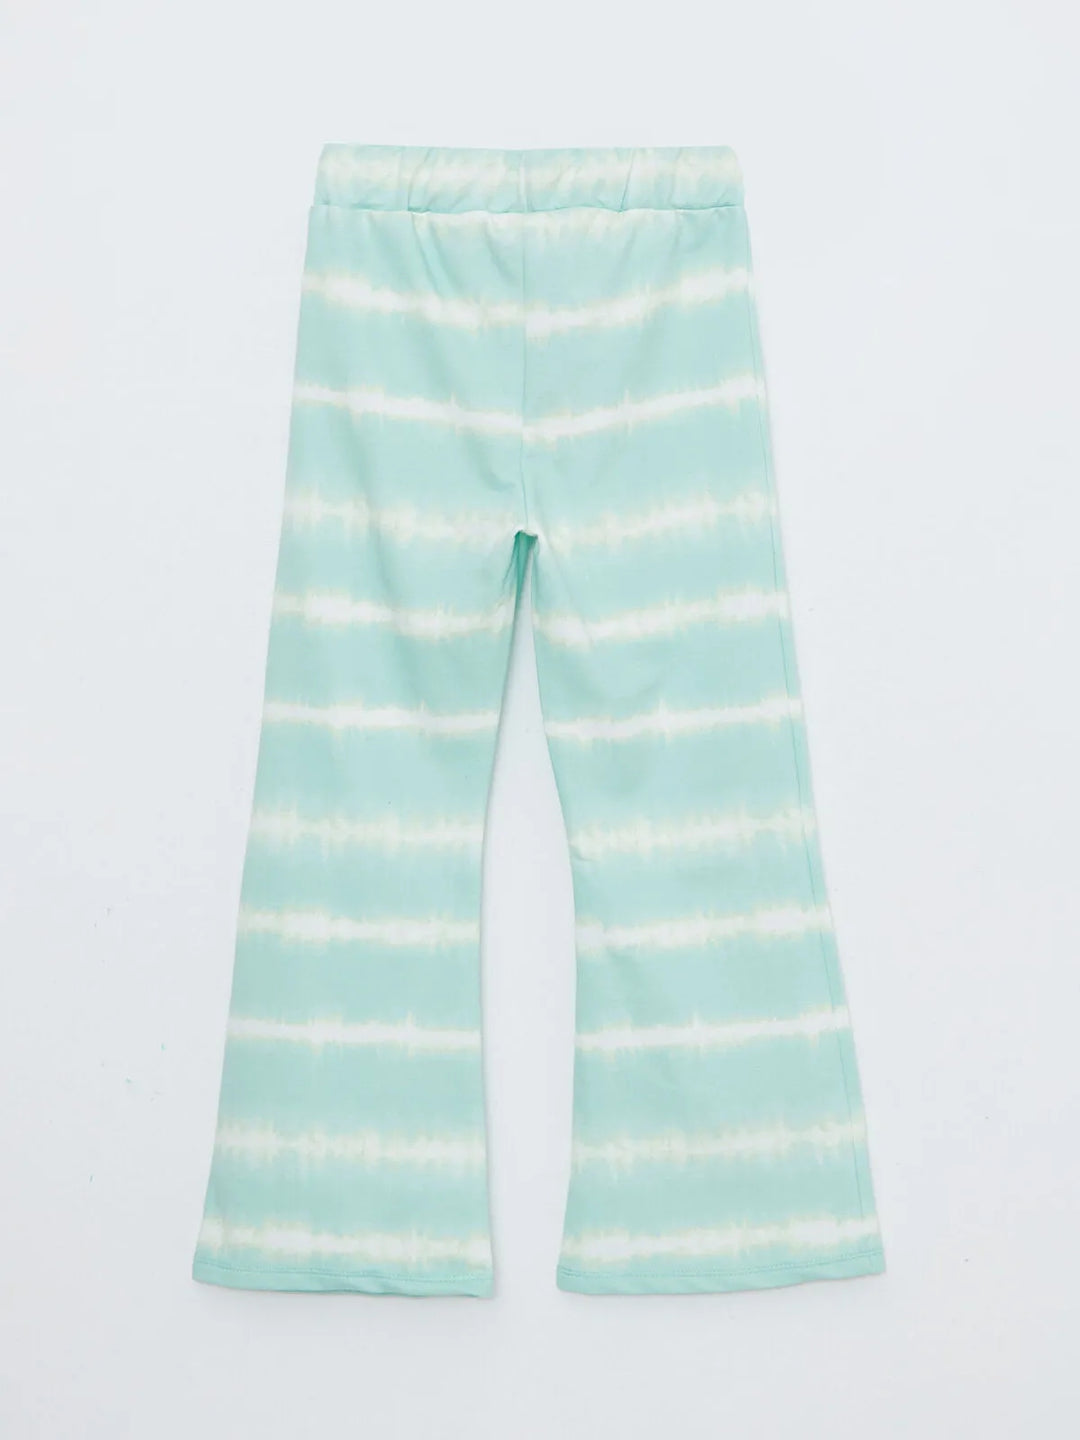 Tie-Dye Patterned Girls Sweatpants With Elastic Waist